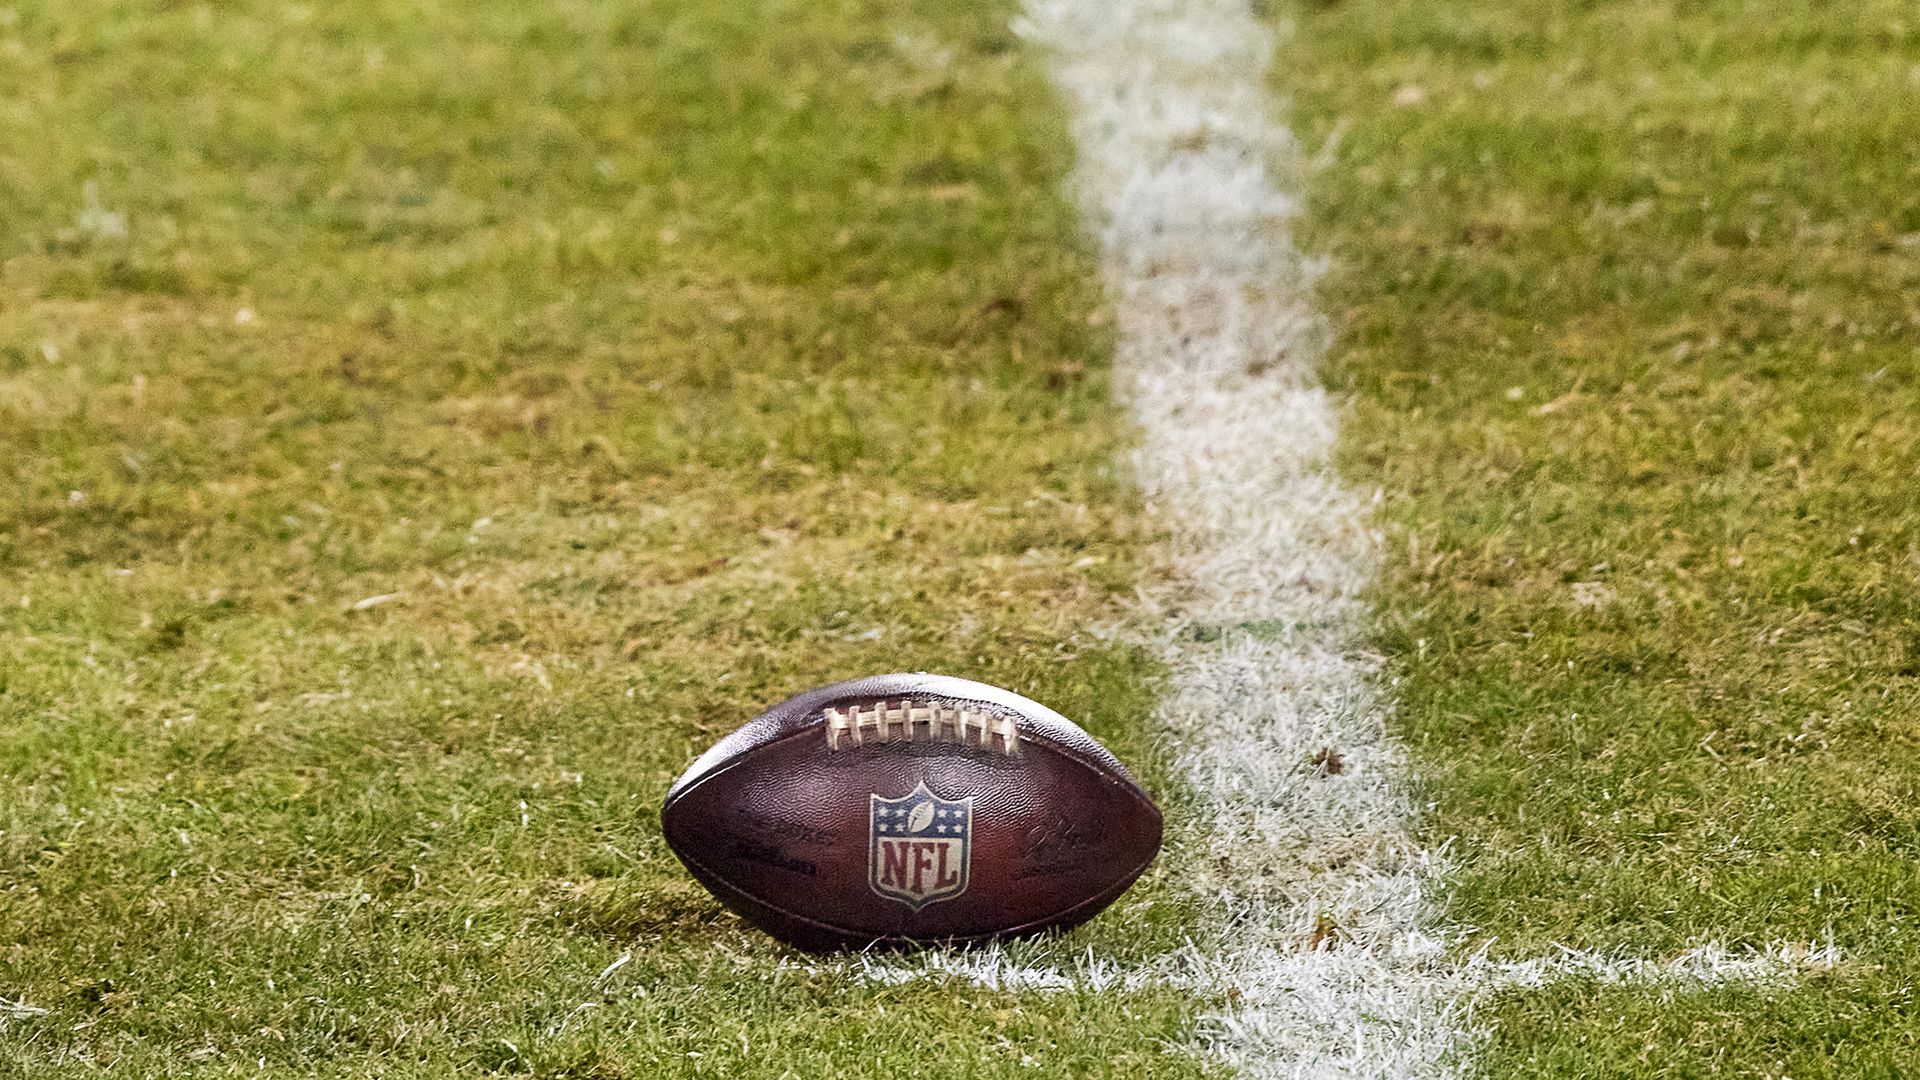 An NFL football on a field.